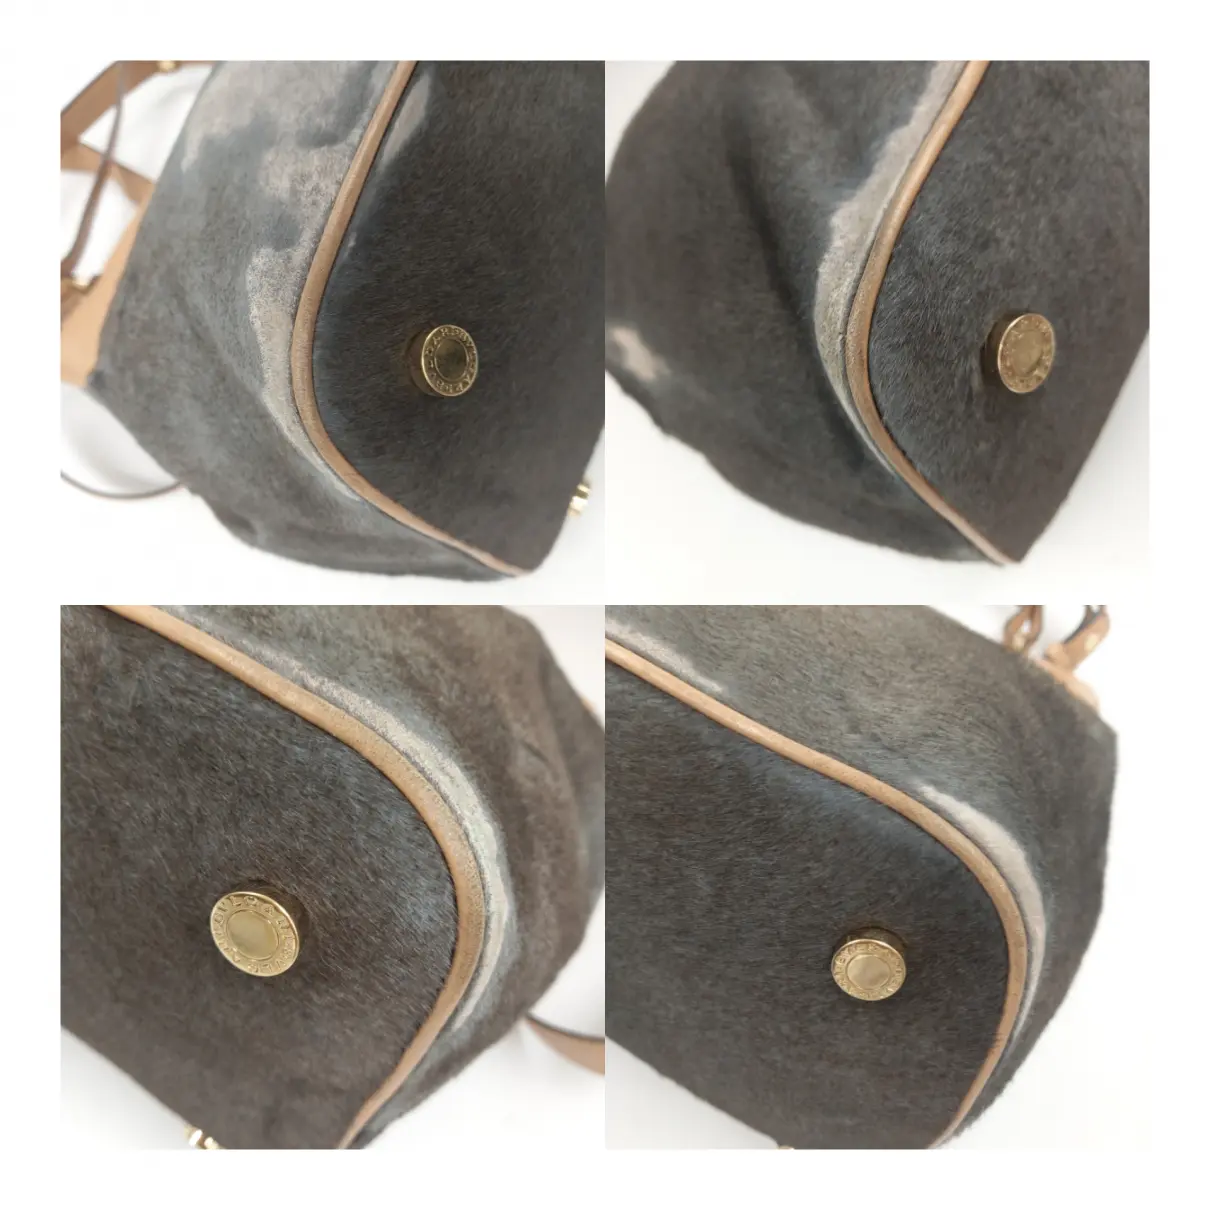 Buy Bvlgari Isabella Rossellini pony-style calfskin handbag online